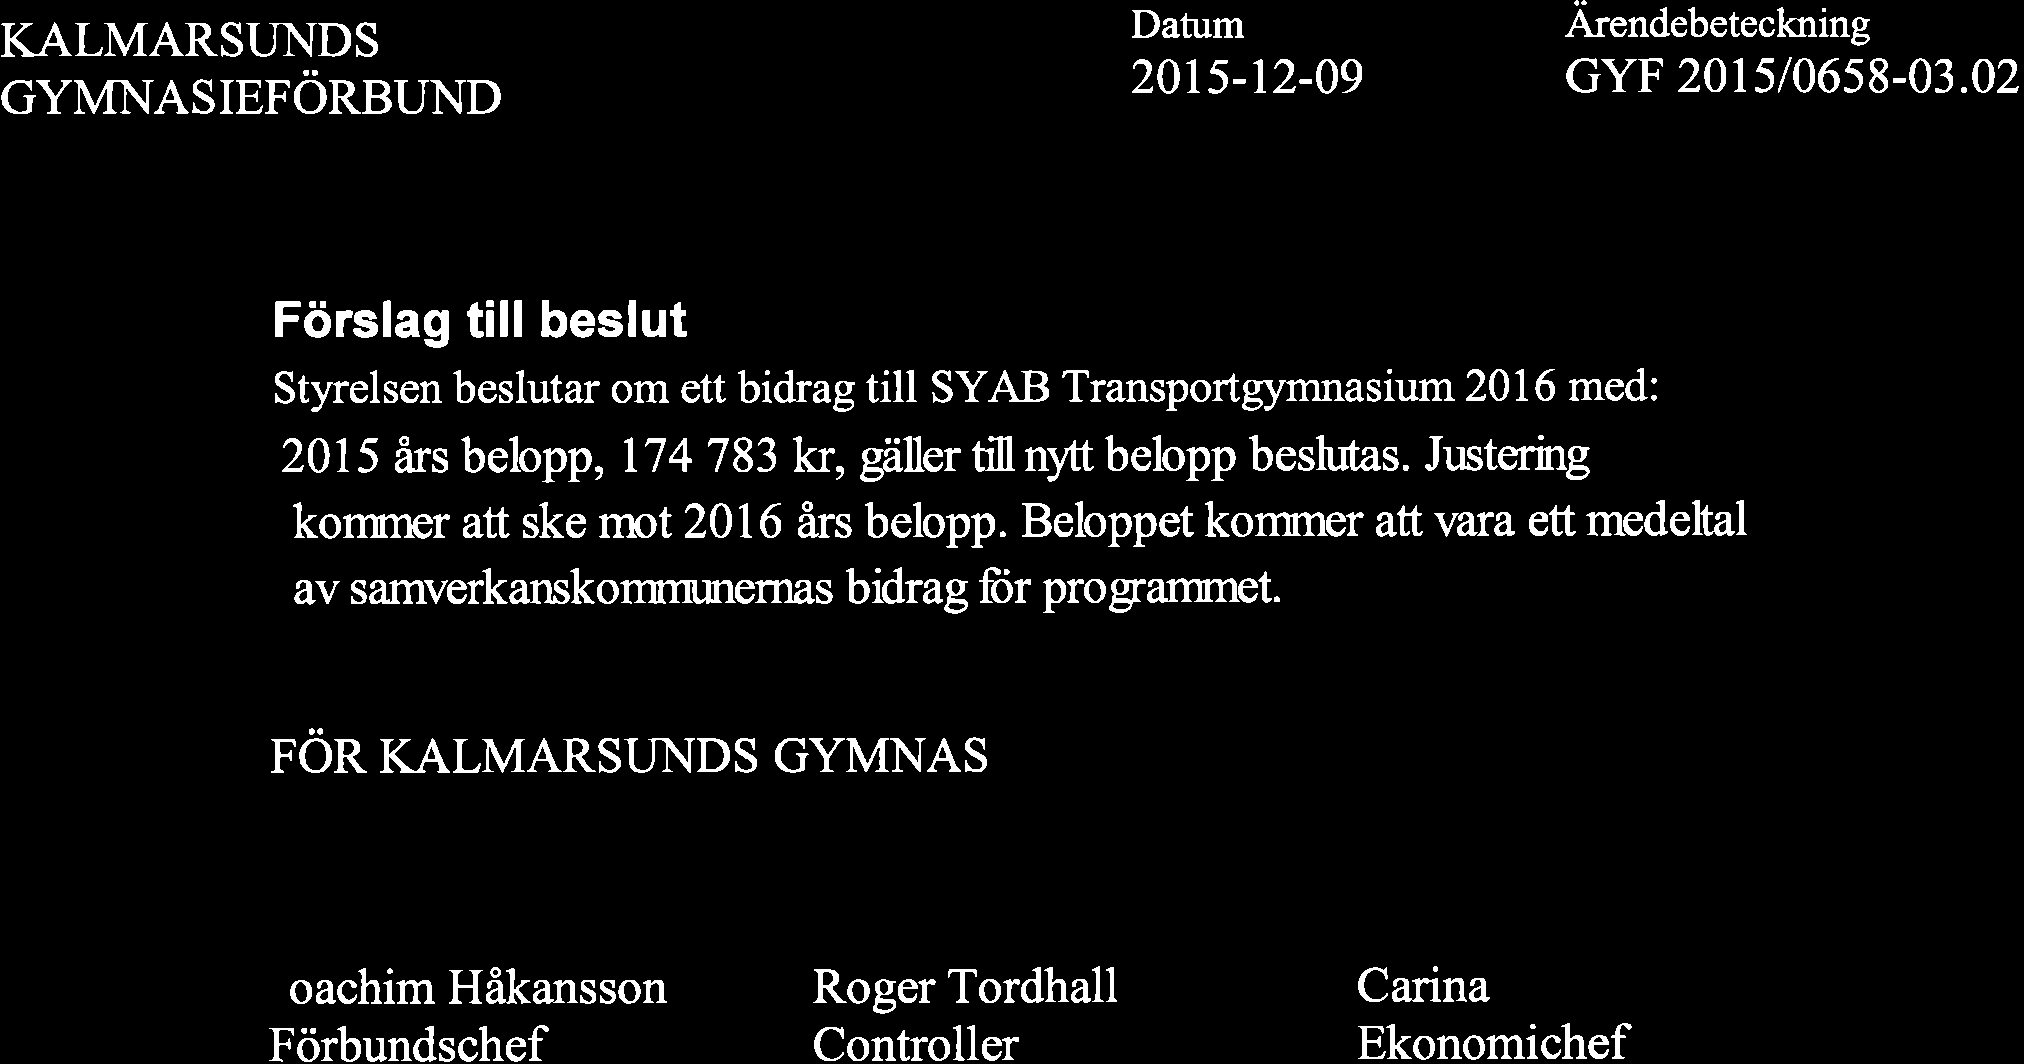 KALMARSUNDS GYMNASIEFÖRBUND 2015-12-09 GYF 2015/0658-03.